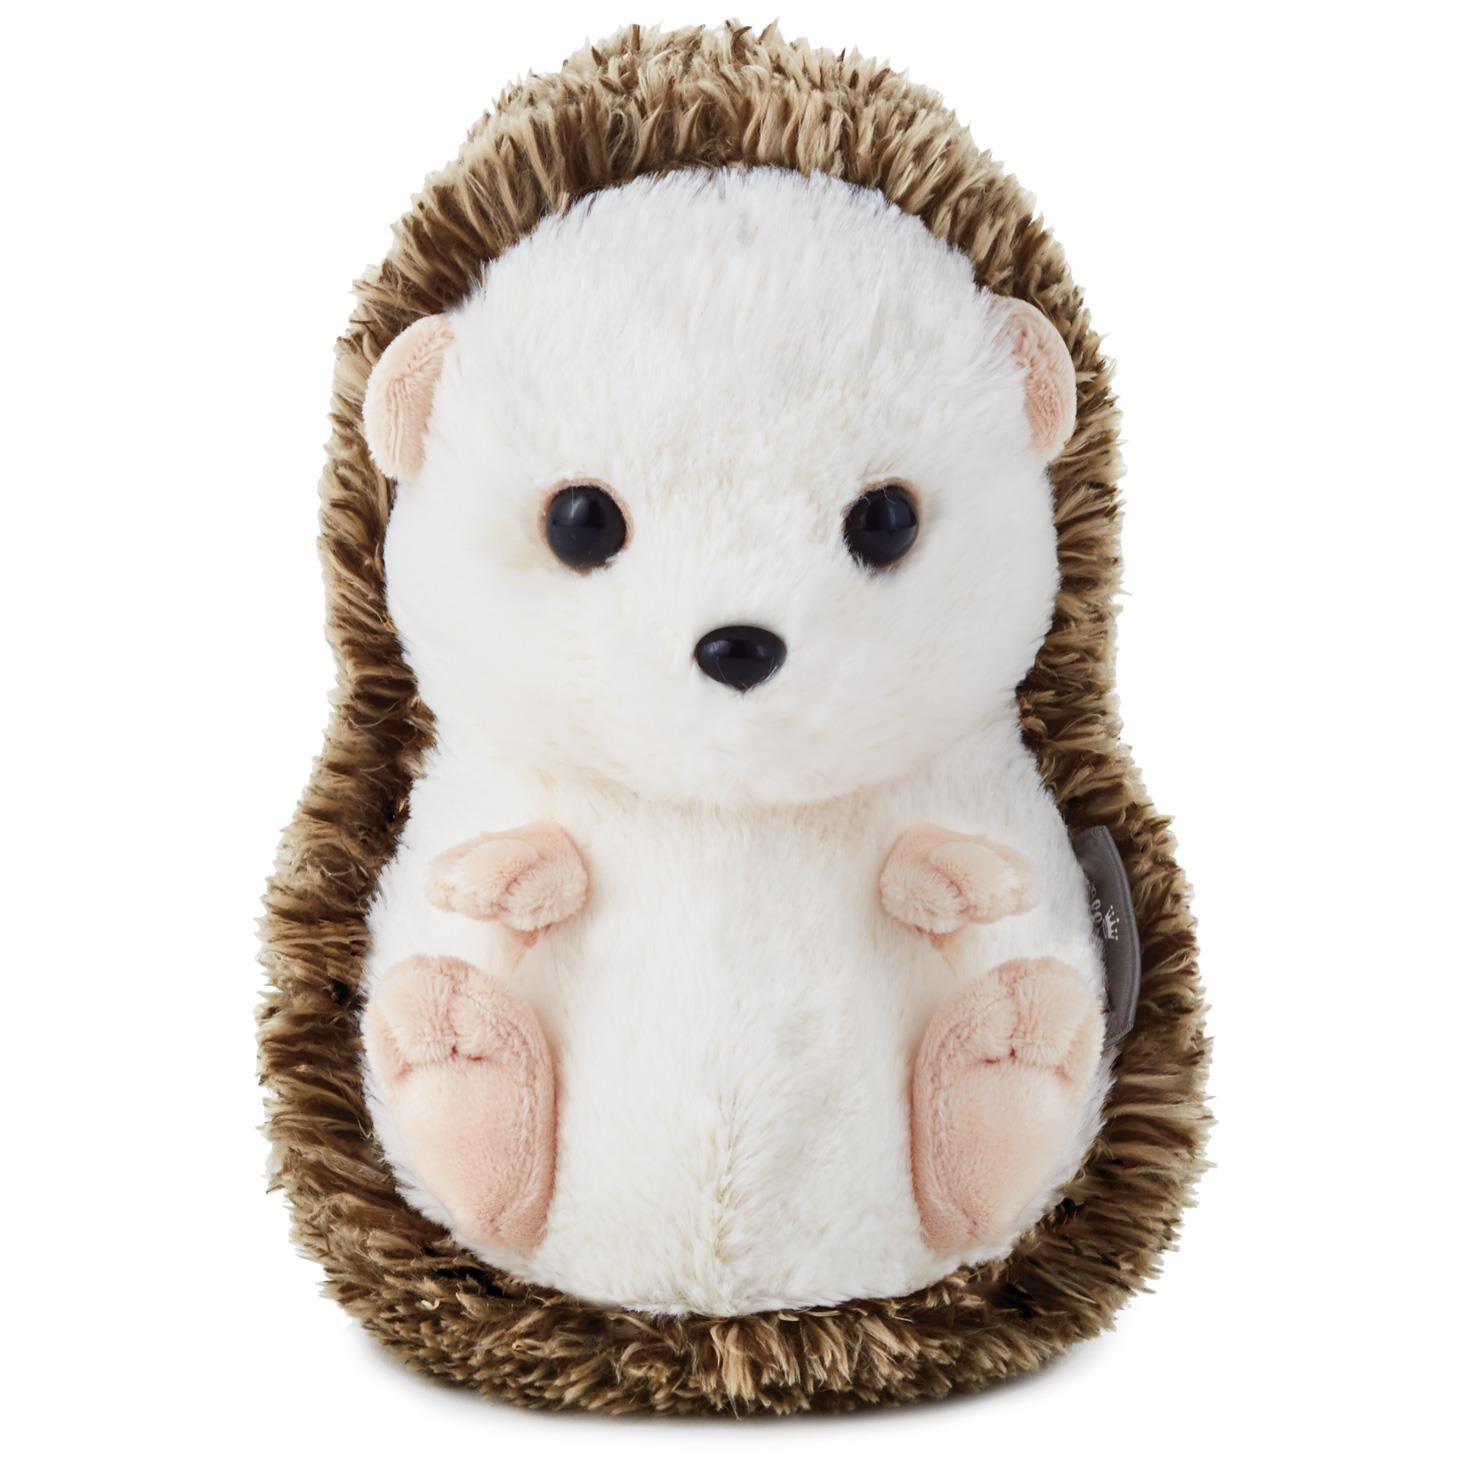 small hedgehog stuffed animal